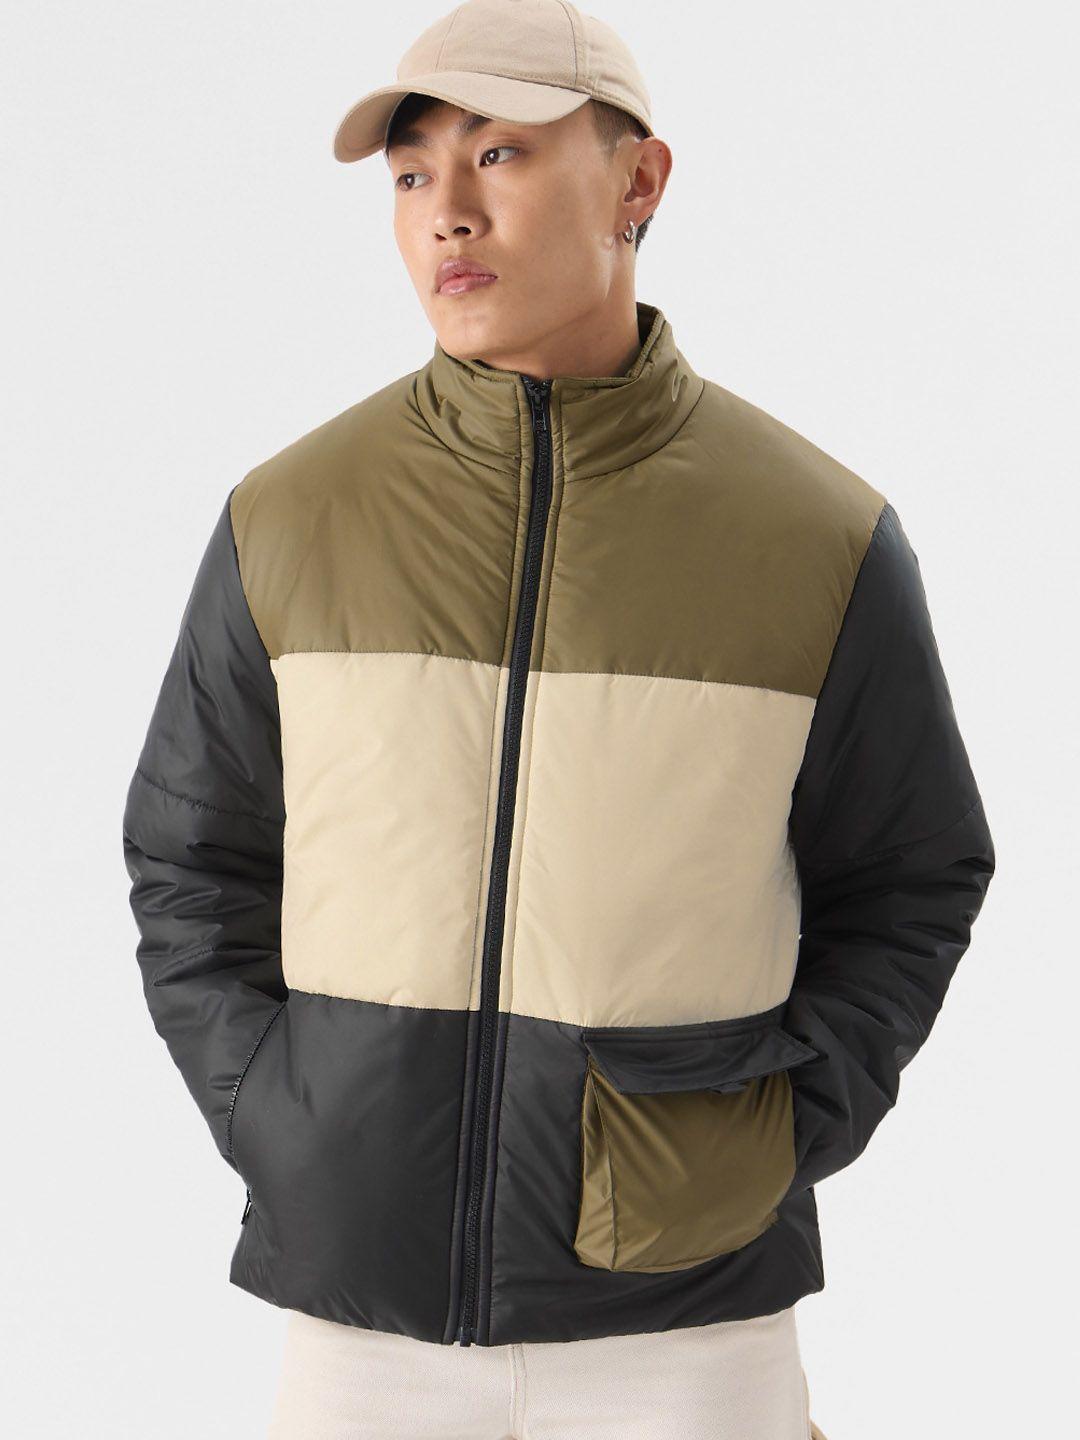 the-souled-store-men-black-&-cream-coloured-colourblocked-lightweight-puffer-jacket